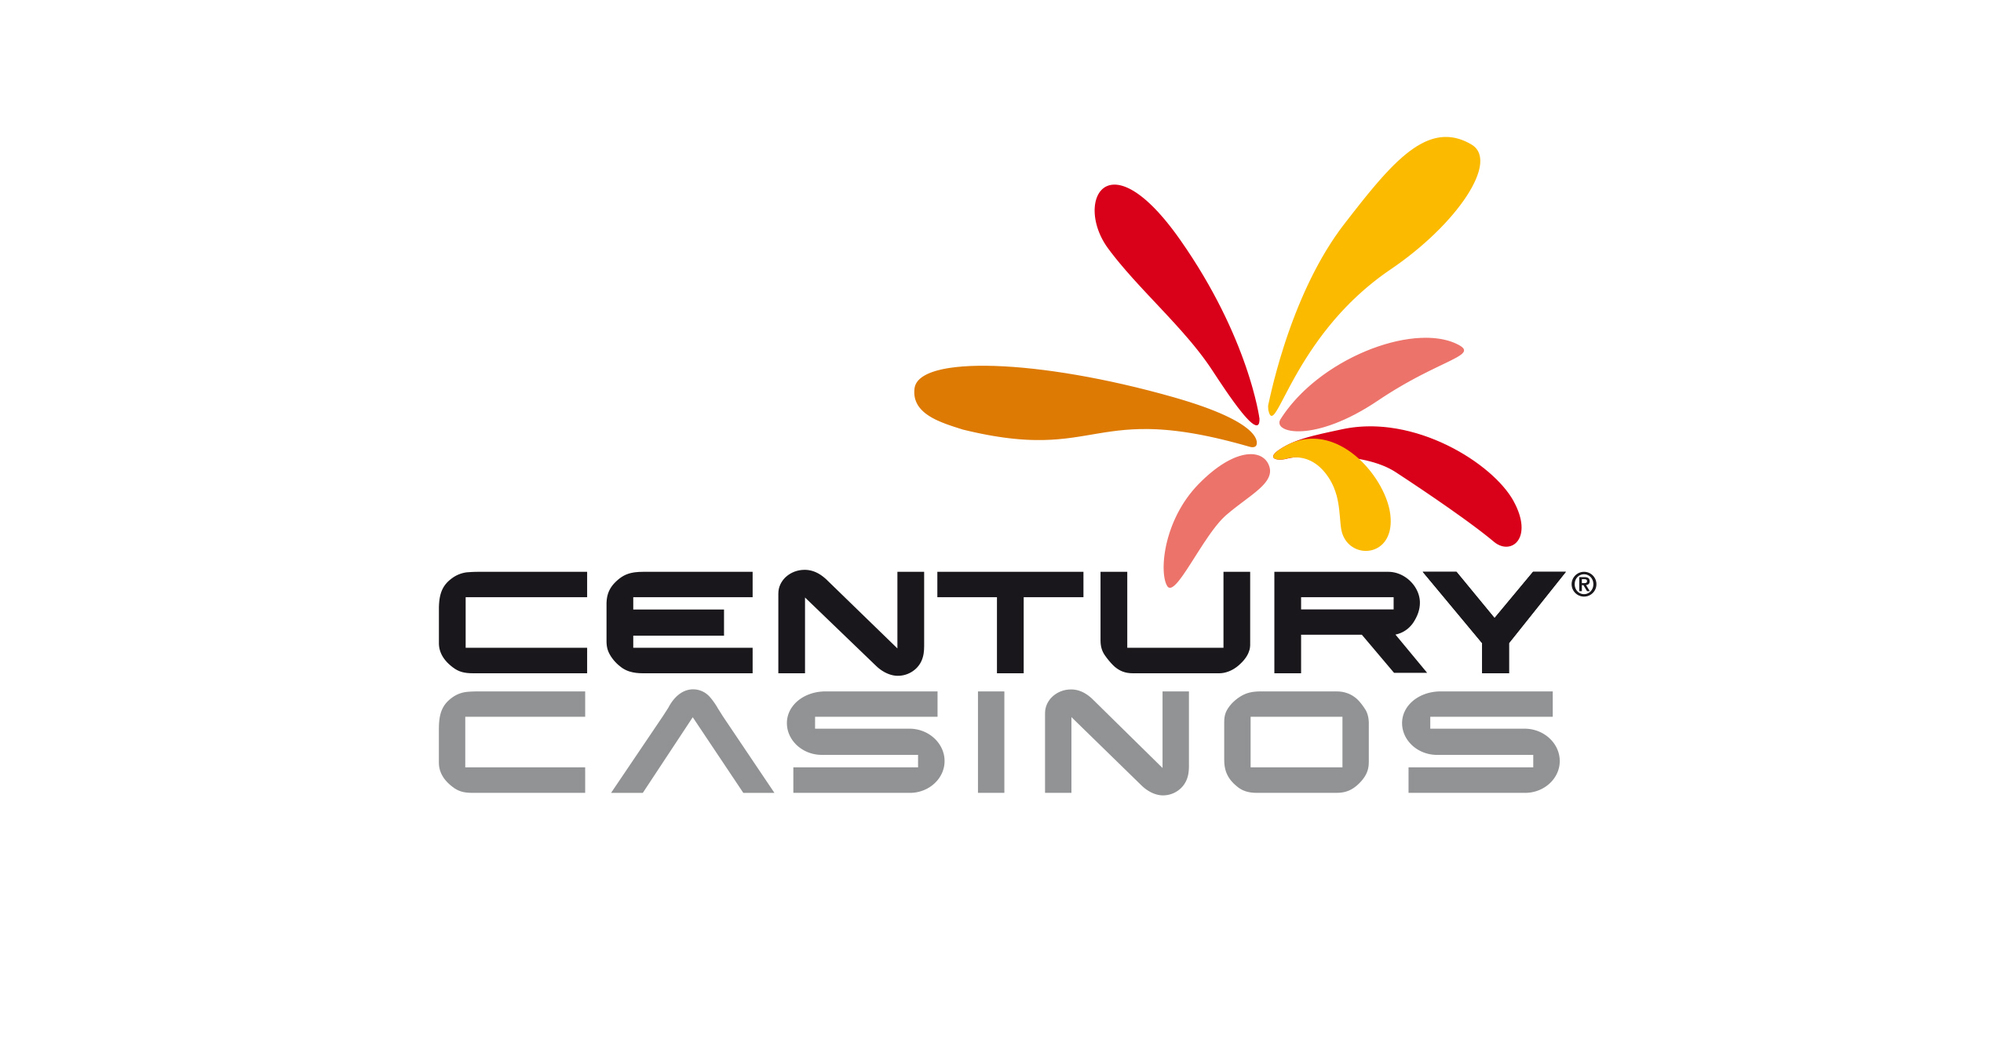 Century Casinos, Inc. Announces Sale-Leaseback of Four Properties in Alberta, Canada